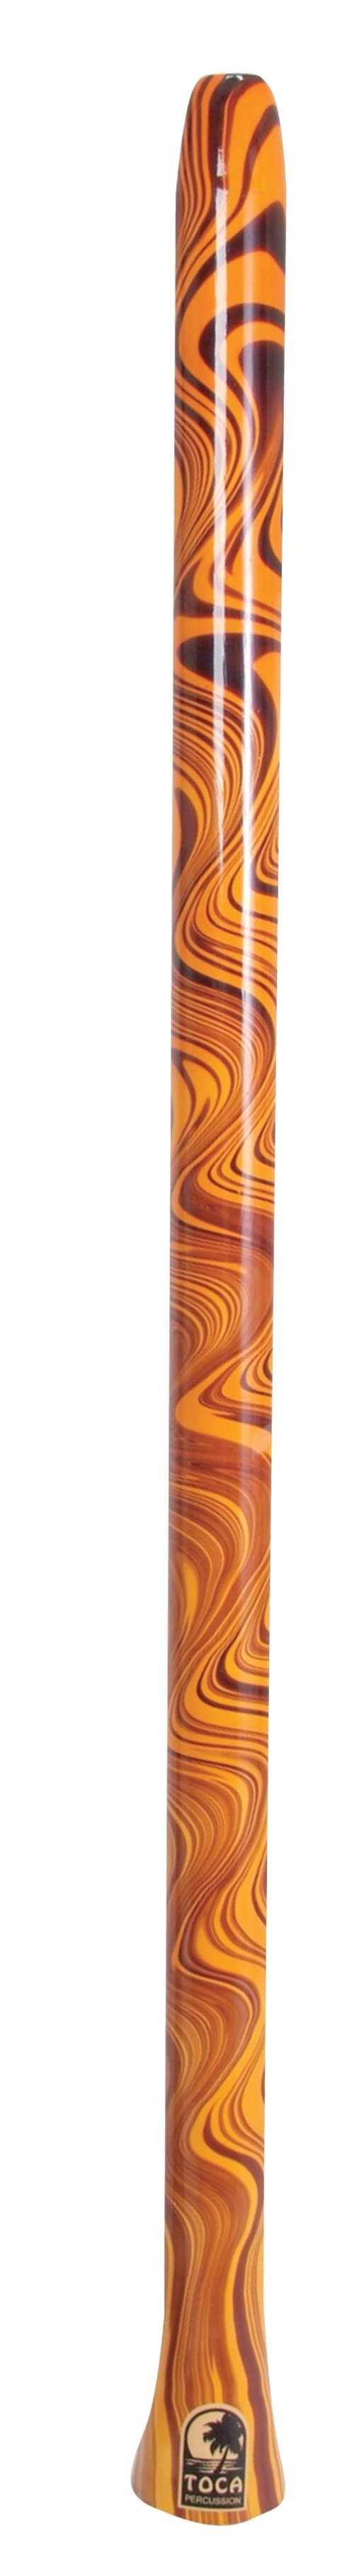 Toca World Percussion Didgeridoos Orange Swirl 140cm